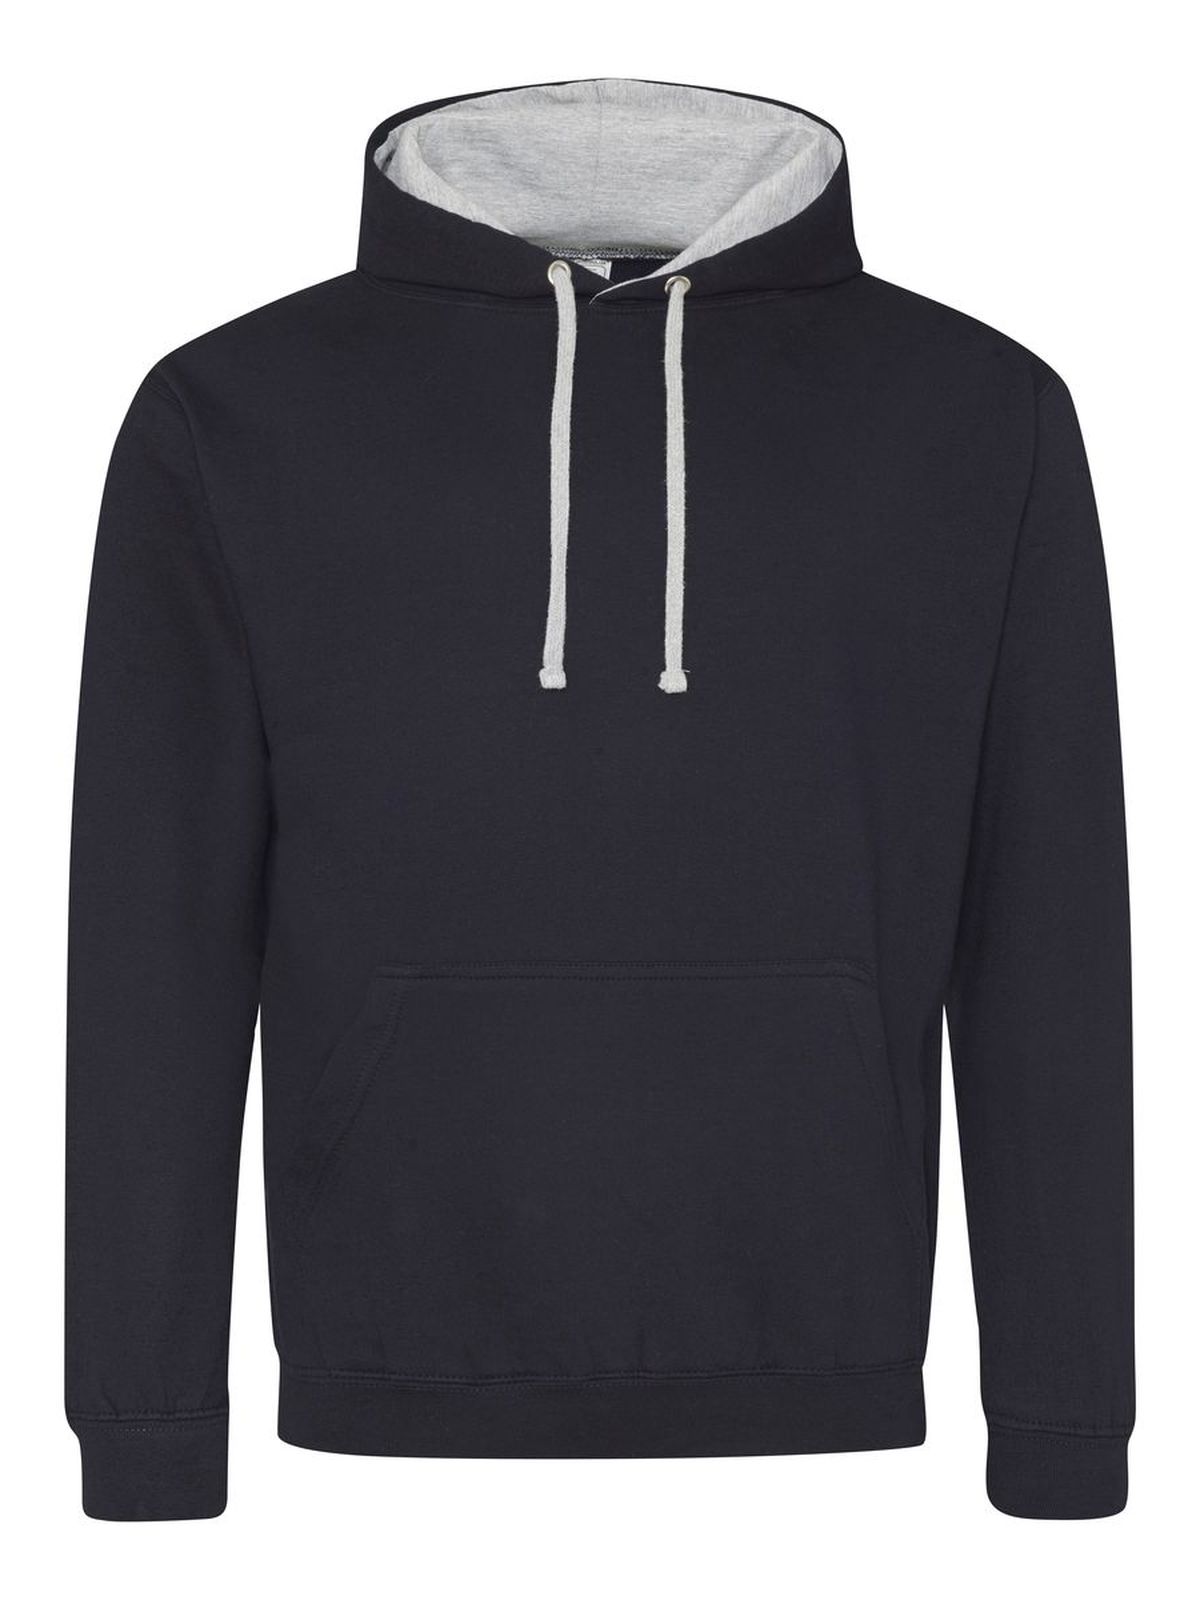 varsity-hoodie-new-french-navy-heather-grey.webp